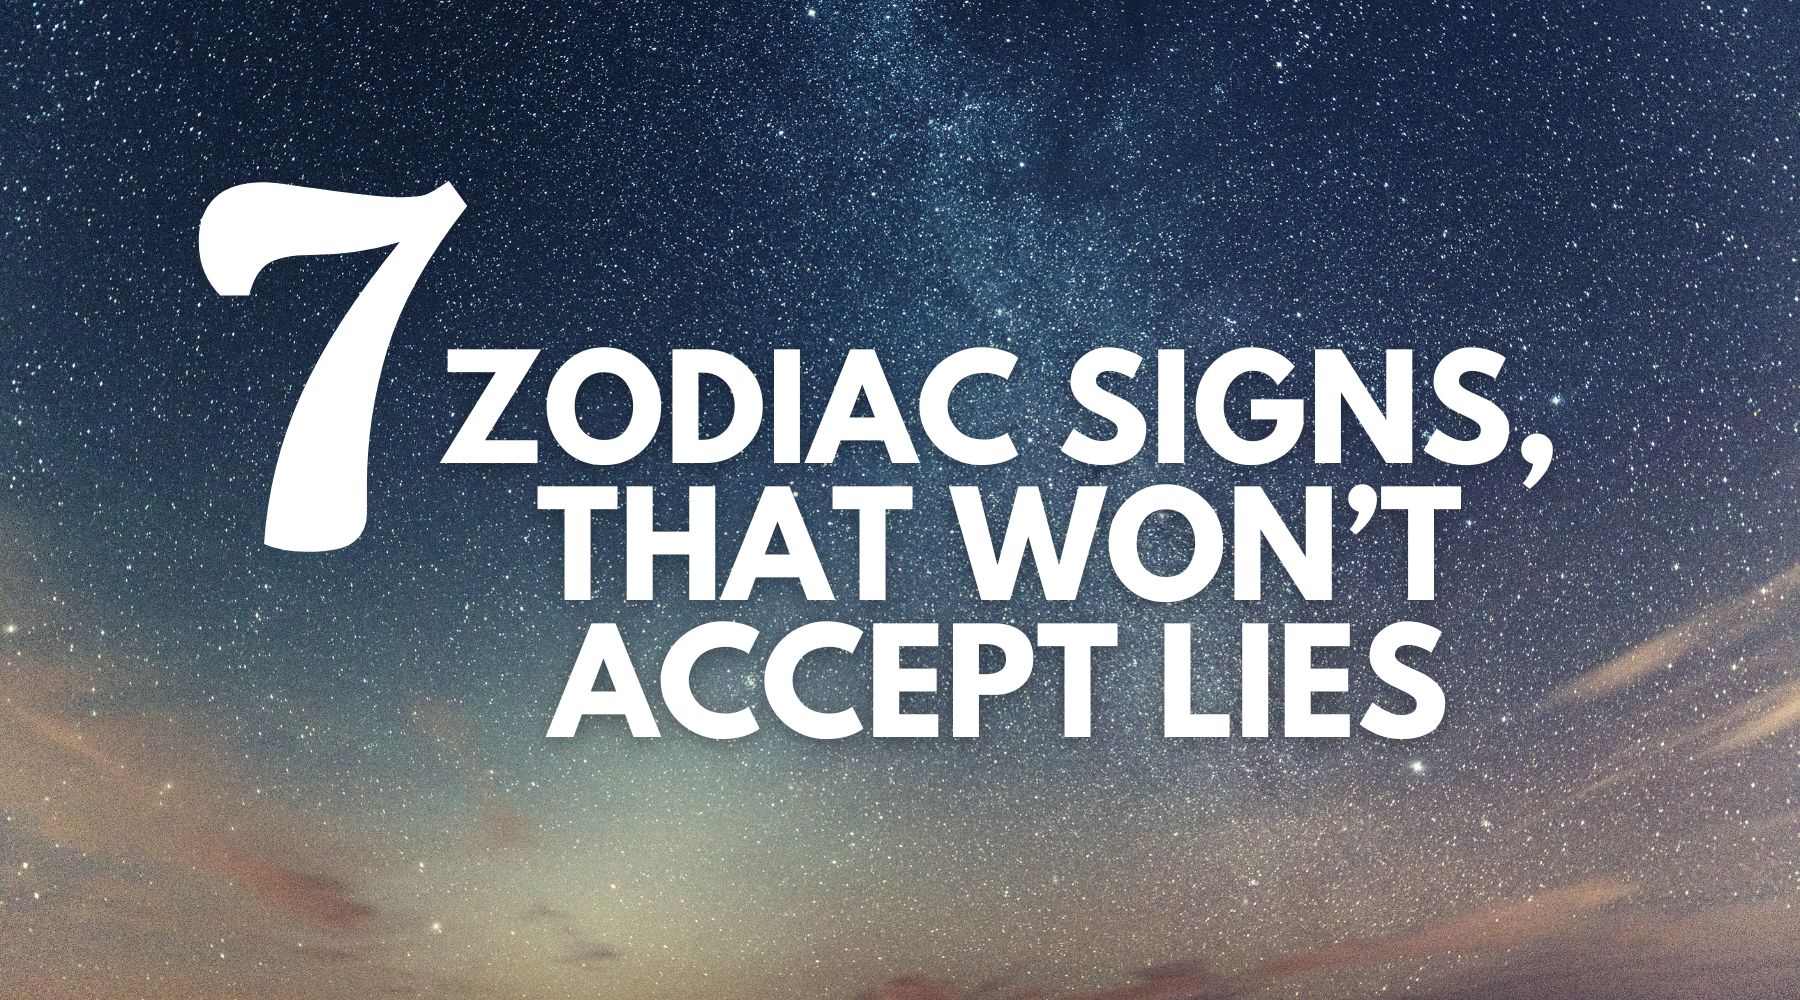 7 zodiac signs, that won’t accept lies